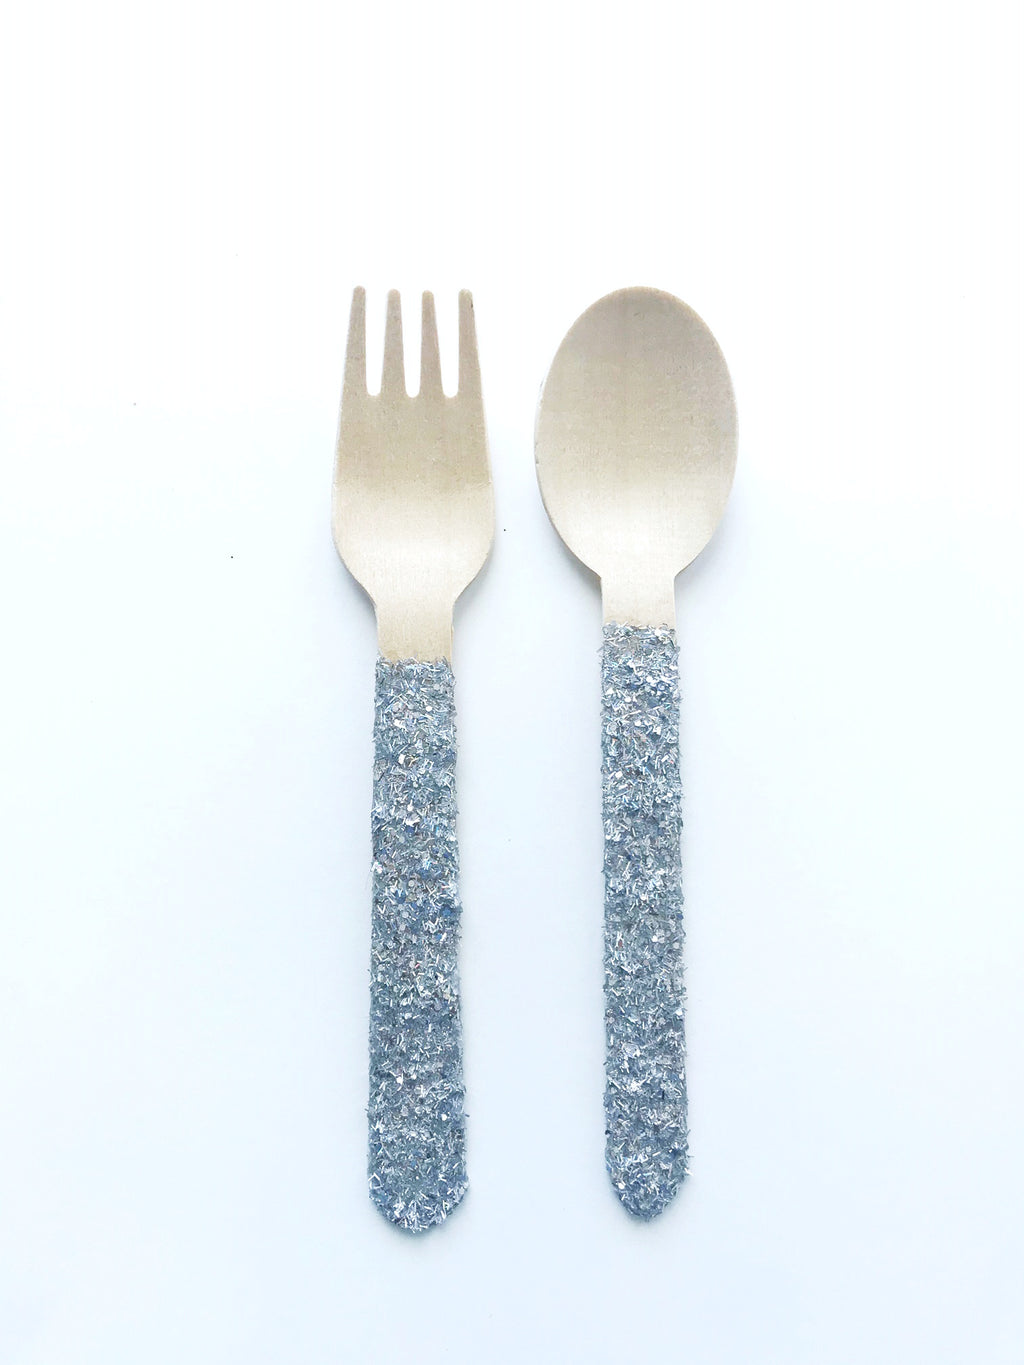 sliver glitter wooden spoon and fork set